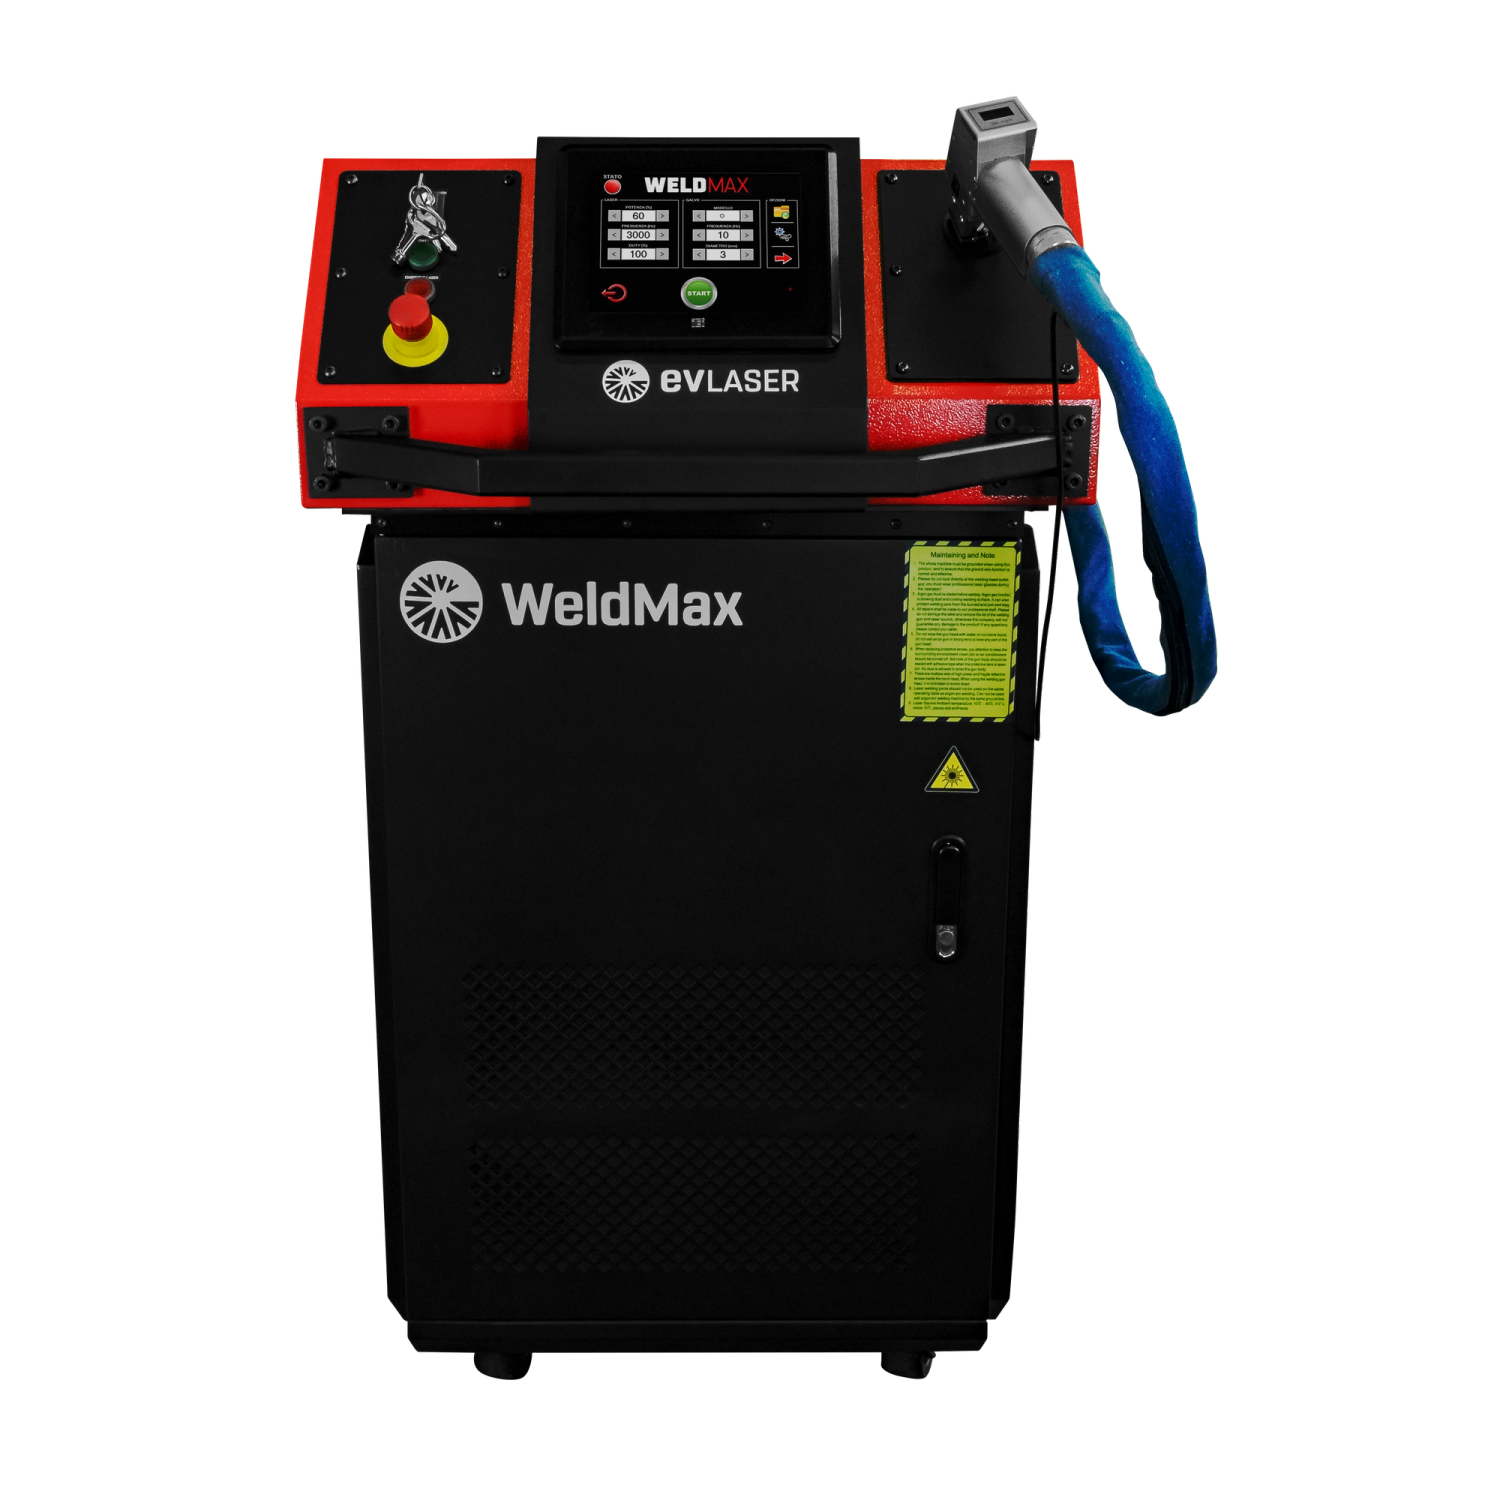 Weldmax - Saldatrice Laser Manuale veloce e di alta qualità